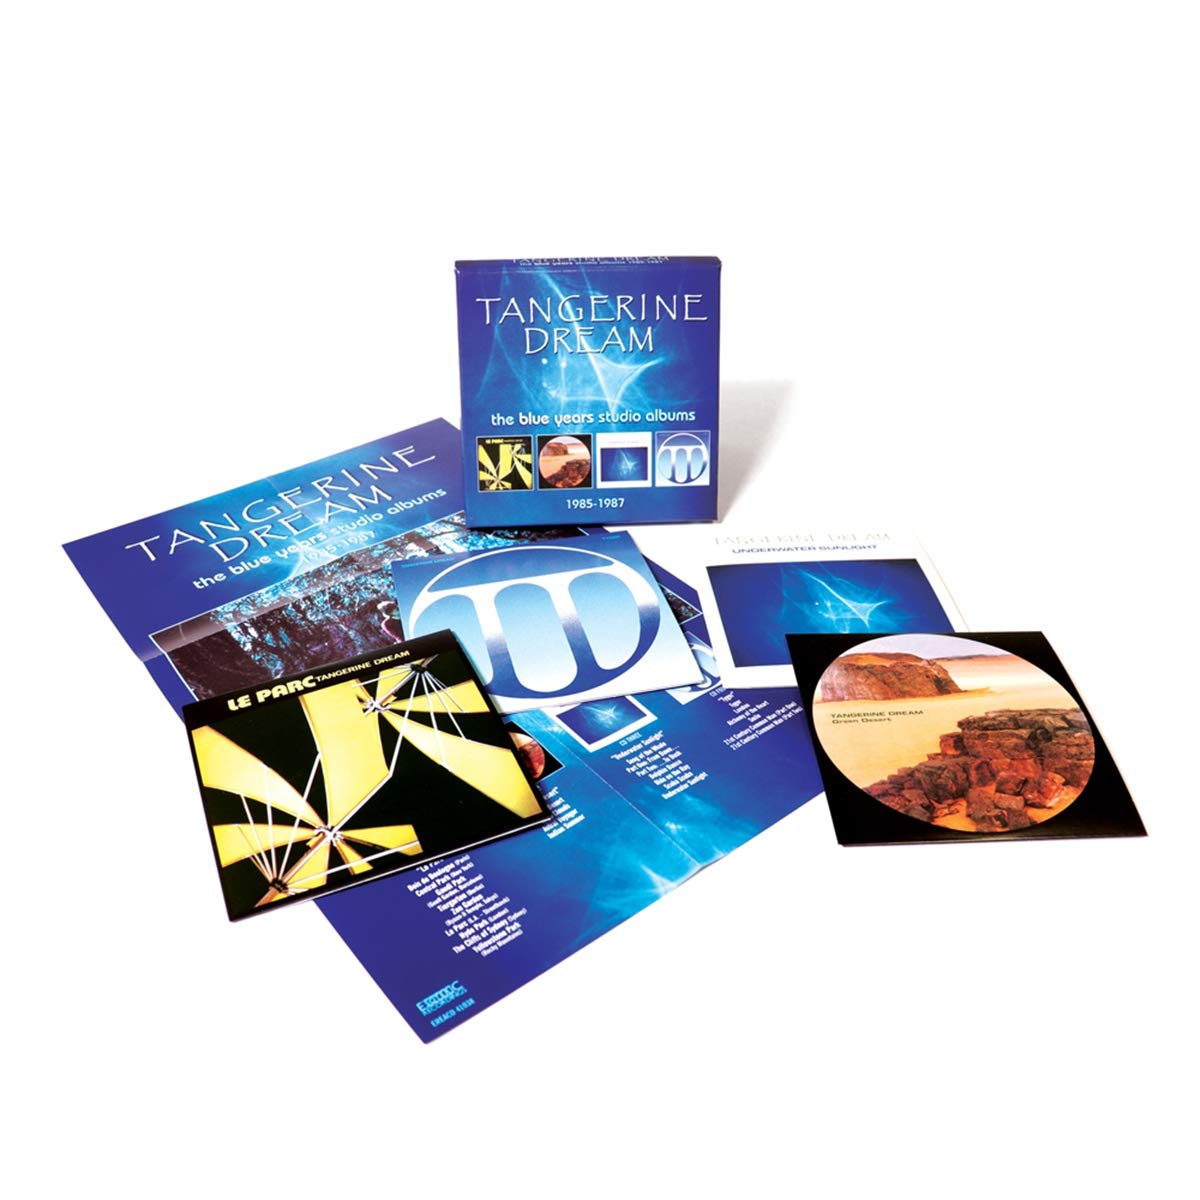 Tangerine Dream (탠저린 드림) - The Blue Years Studio Albums 1985-1987 